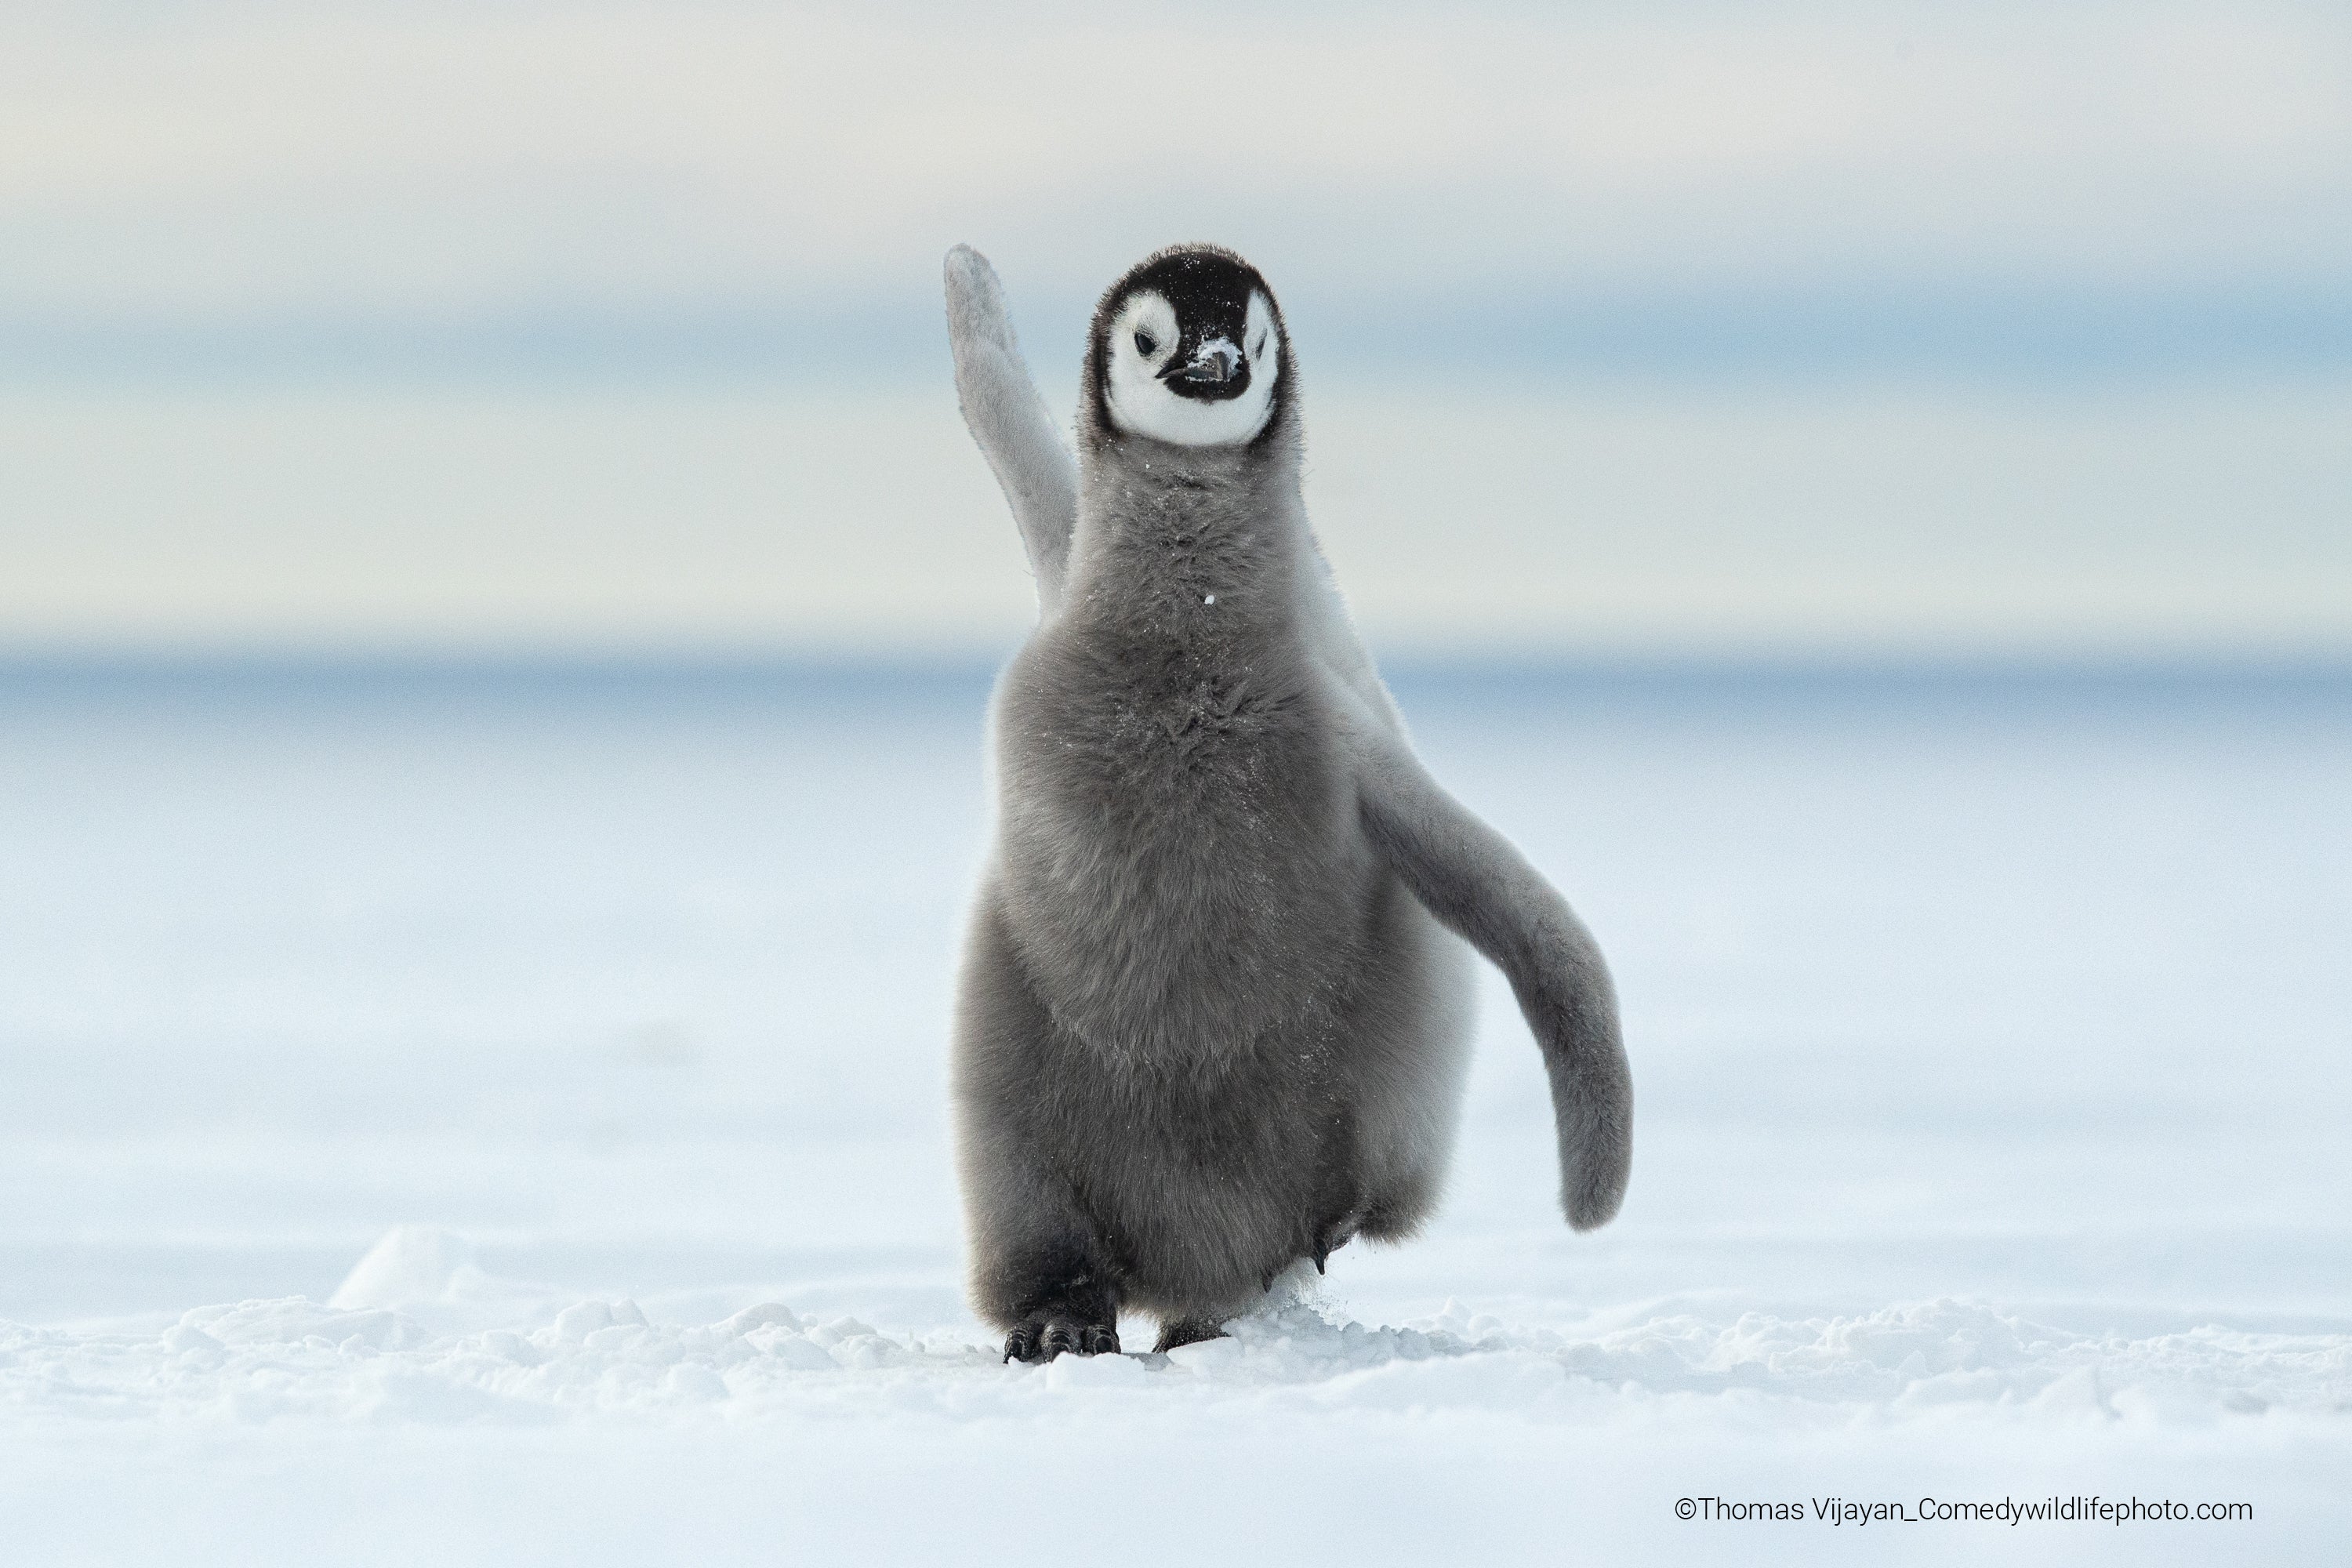 A large emperor penguin chick in Antarctica. (Photo: © Thomas Vijayan / Comedywildlifephoto.com.)